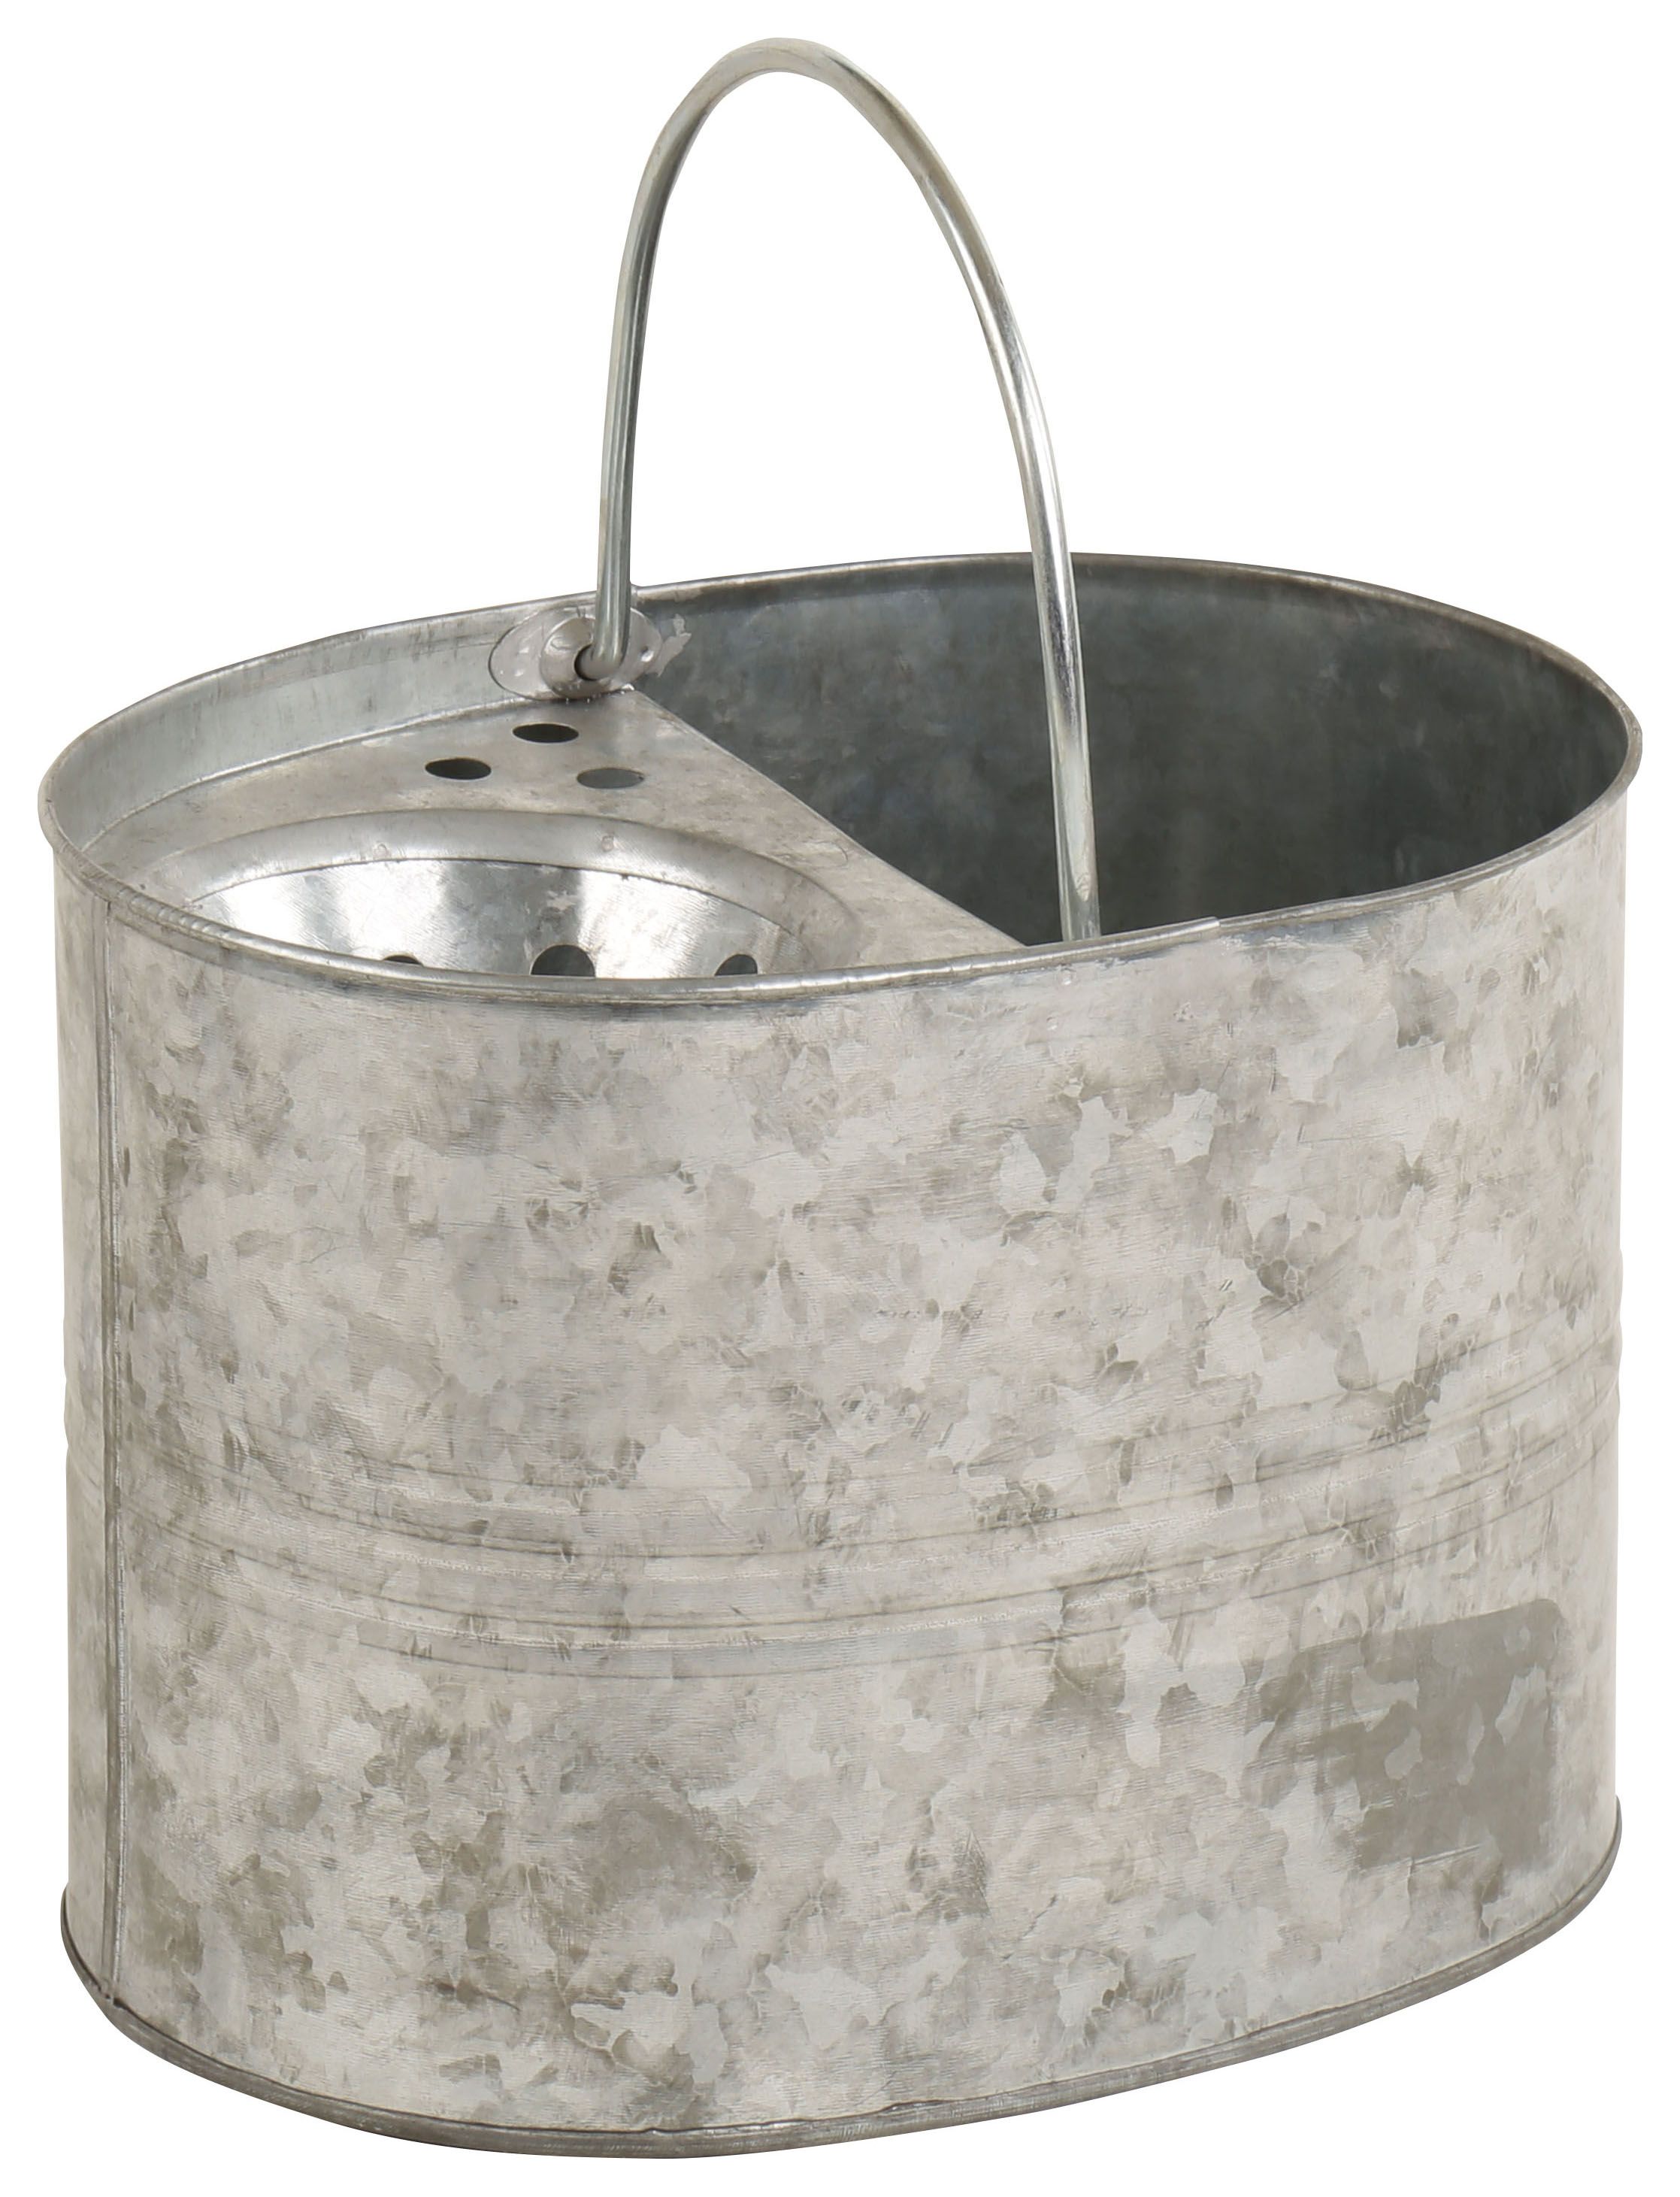 Image of Heavy Duty Galvanised Mop Bucket